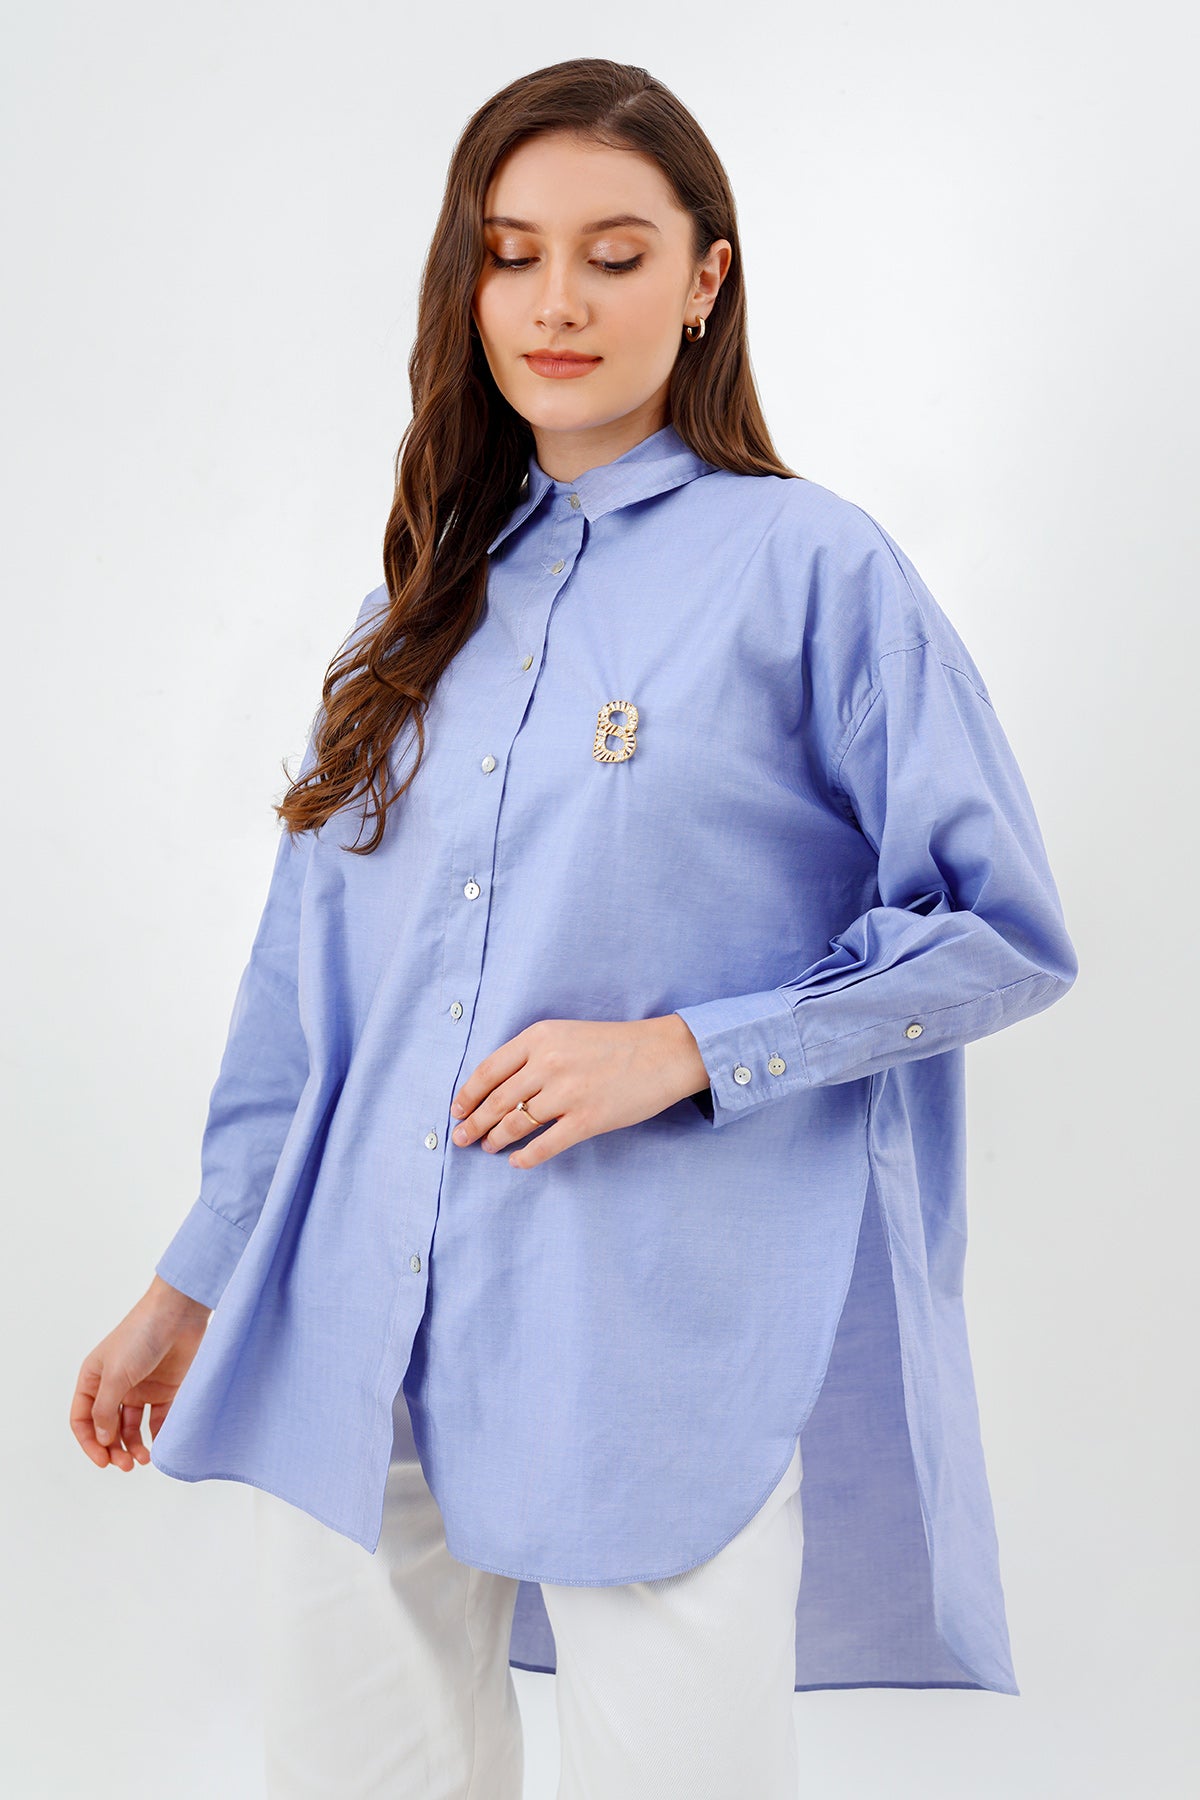 Eola Shirt 2.0 - Light Blue